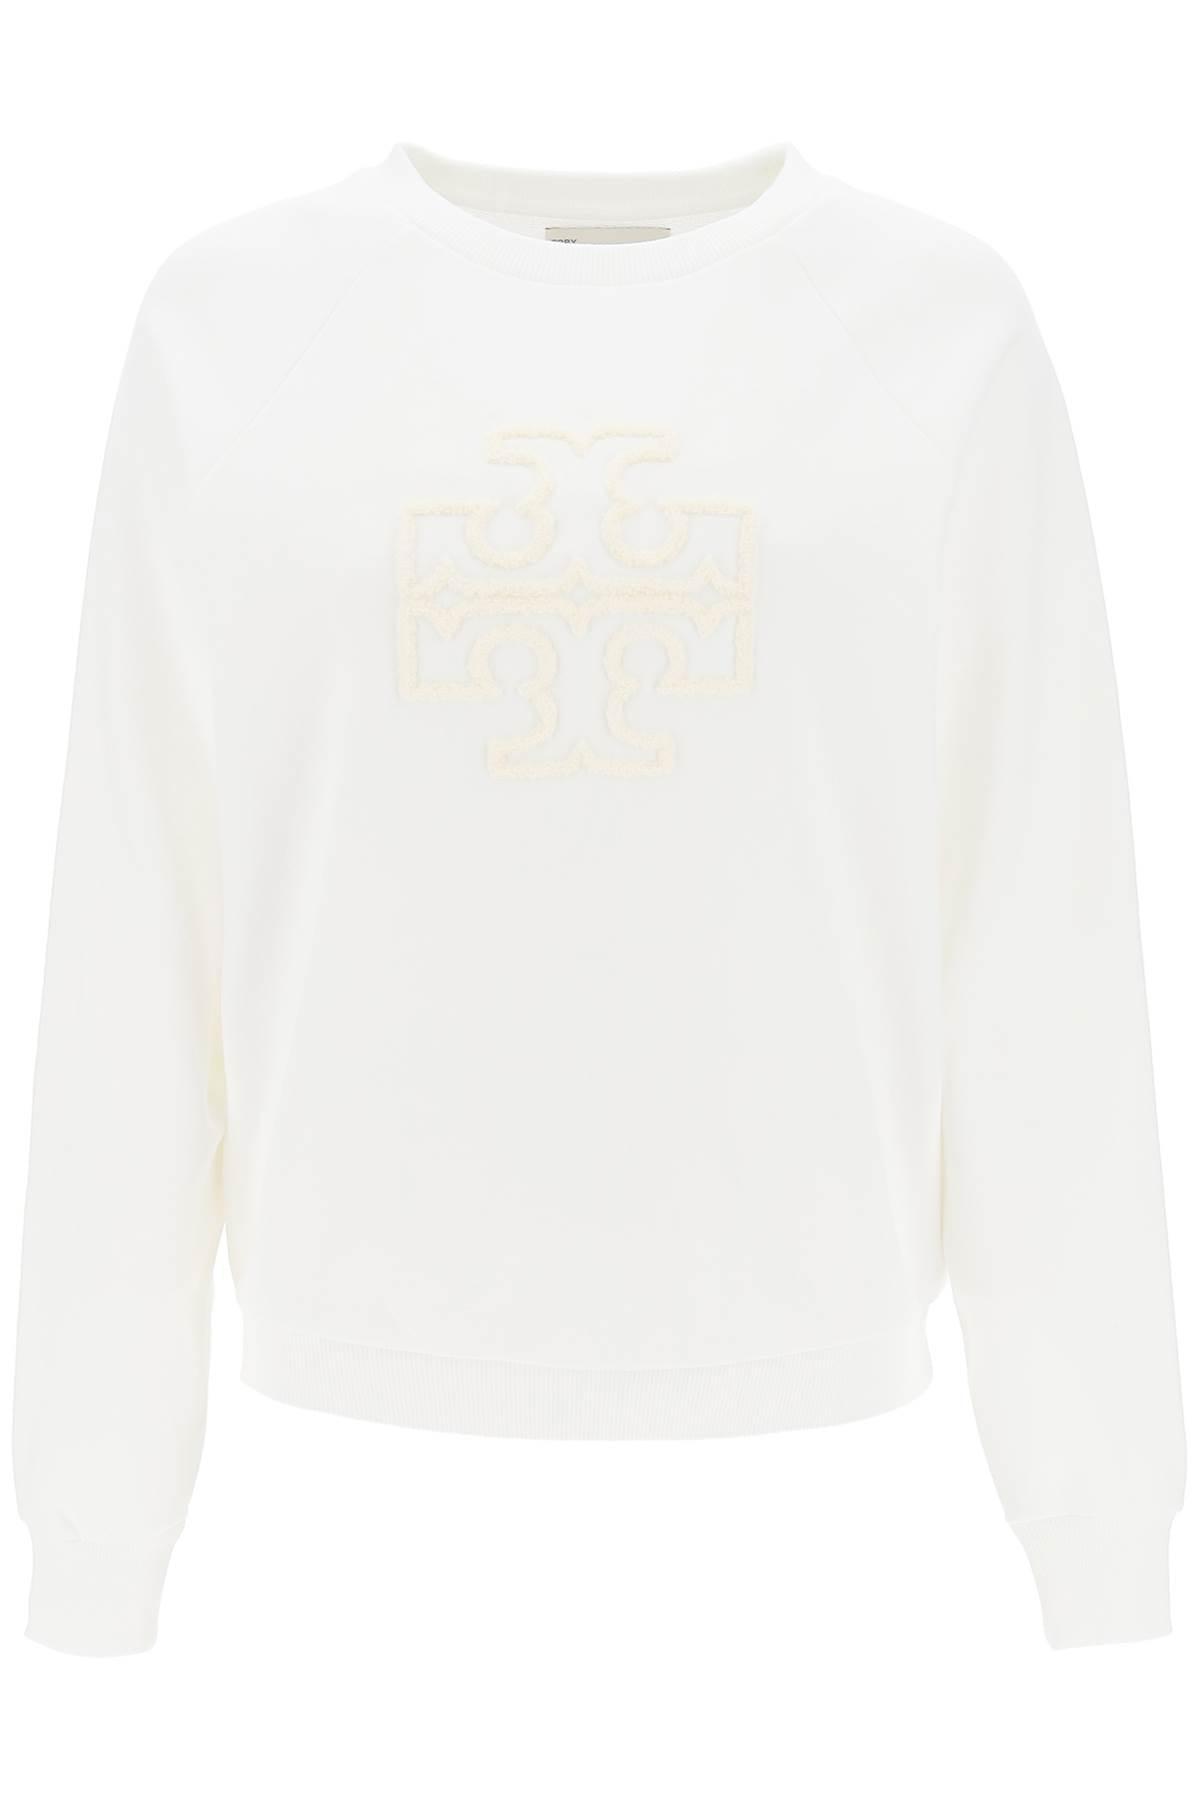 Tory Burch Crew Neck Sweatshirt With T Logo in White | Lyst